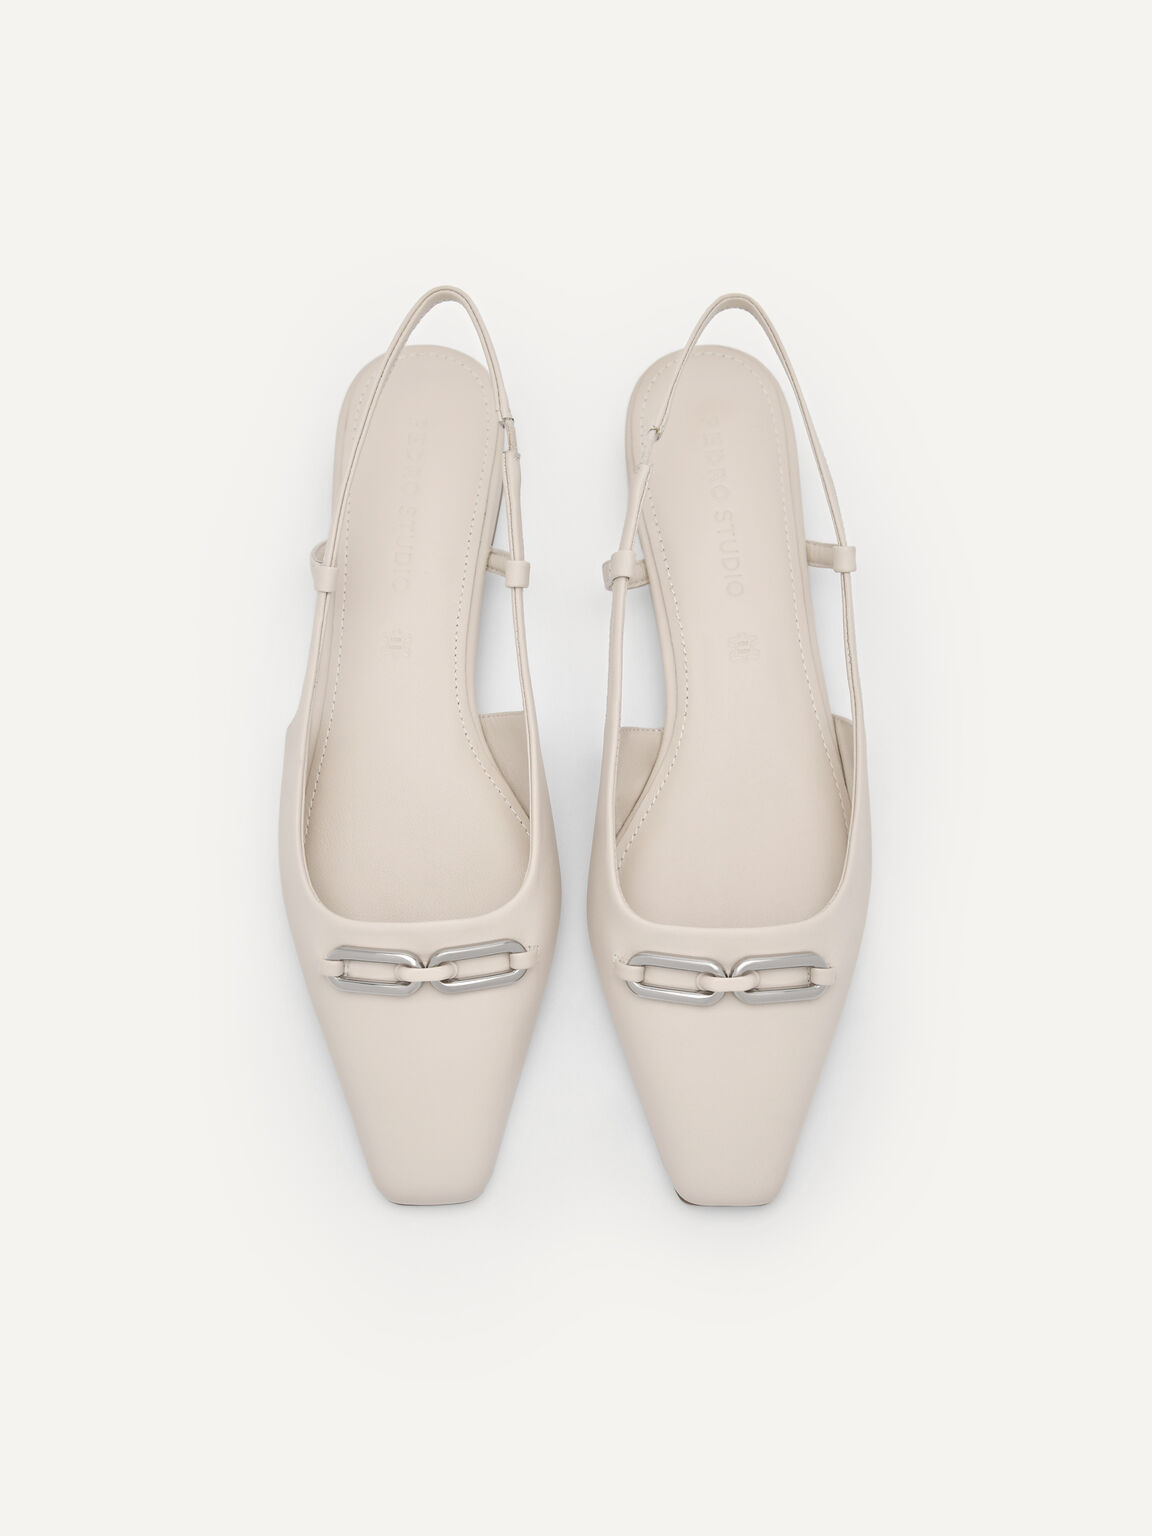 PEDRO Studio Kate Leather Ballerina Flats, Cream